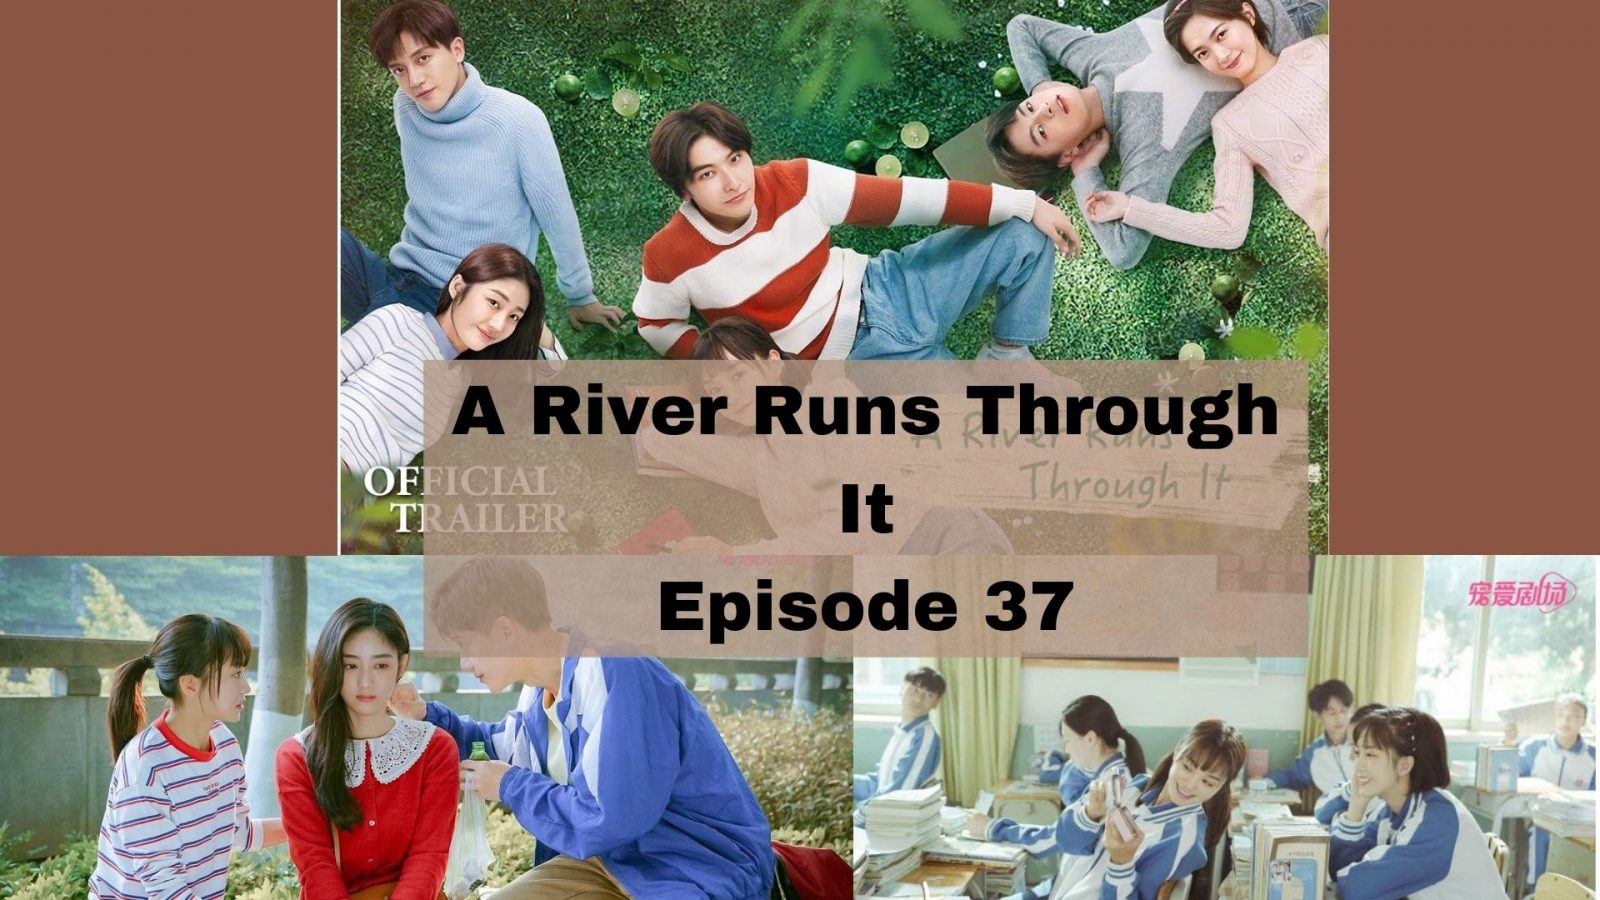 A River Runs Through It Episode 37 Release Date Spoilers